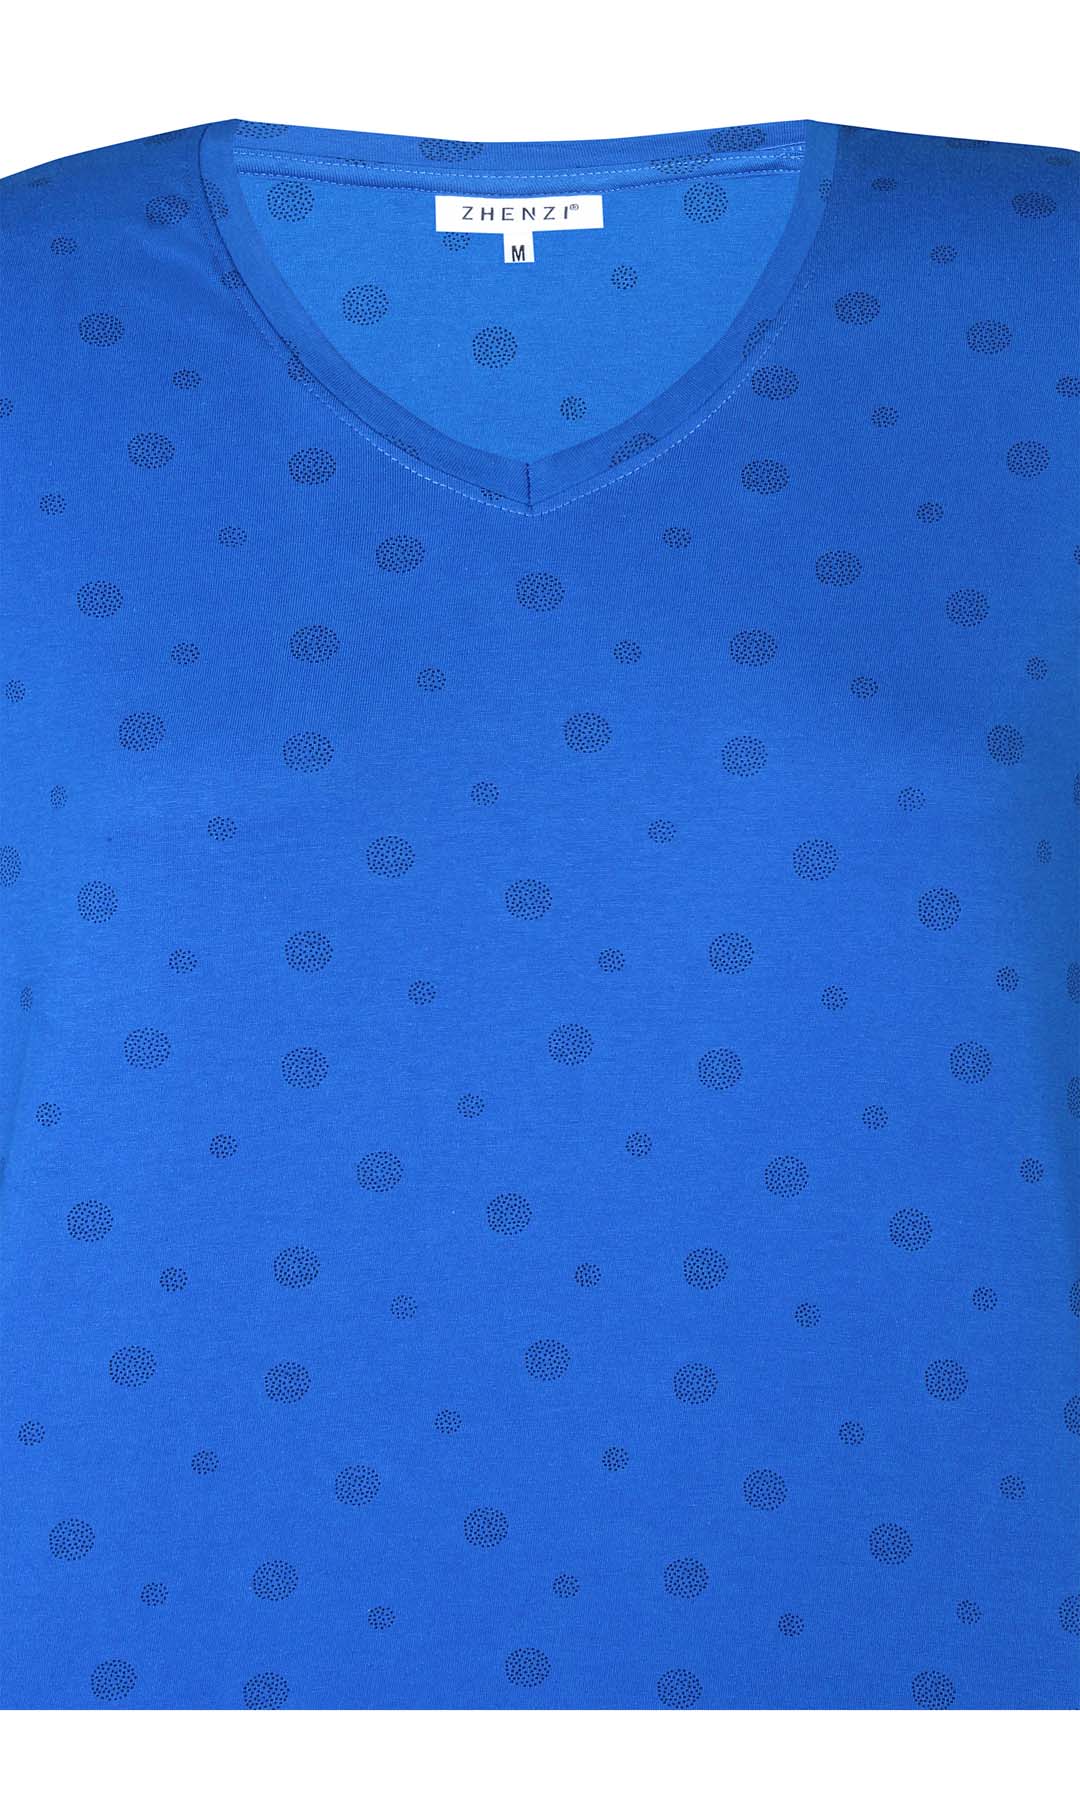 Alberta 095 - T-shirt - Blue